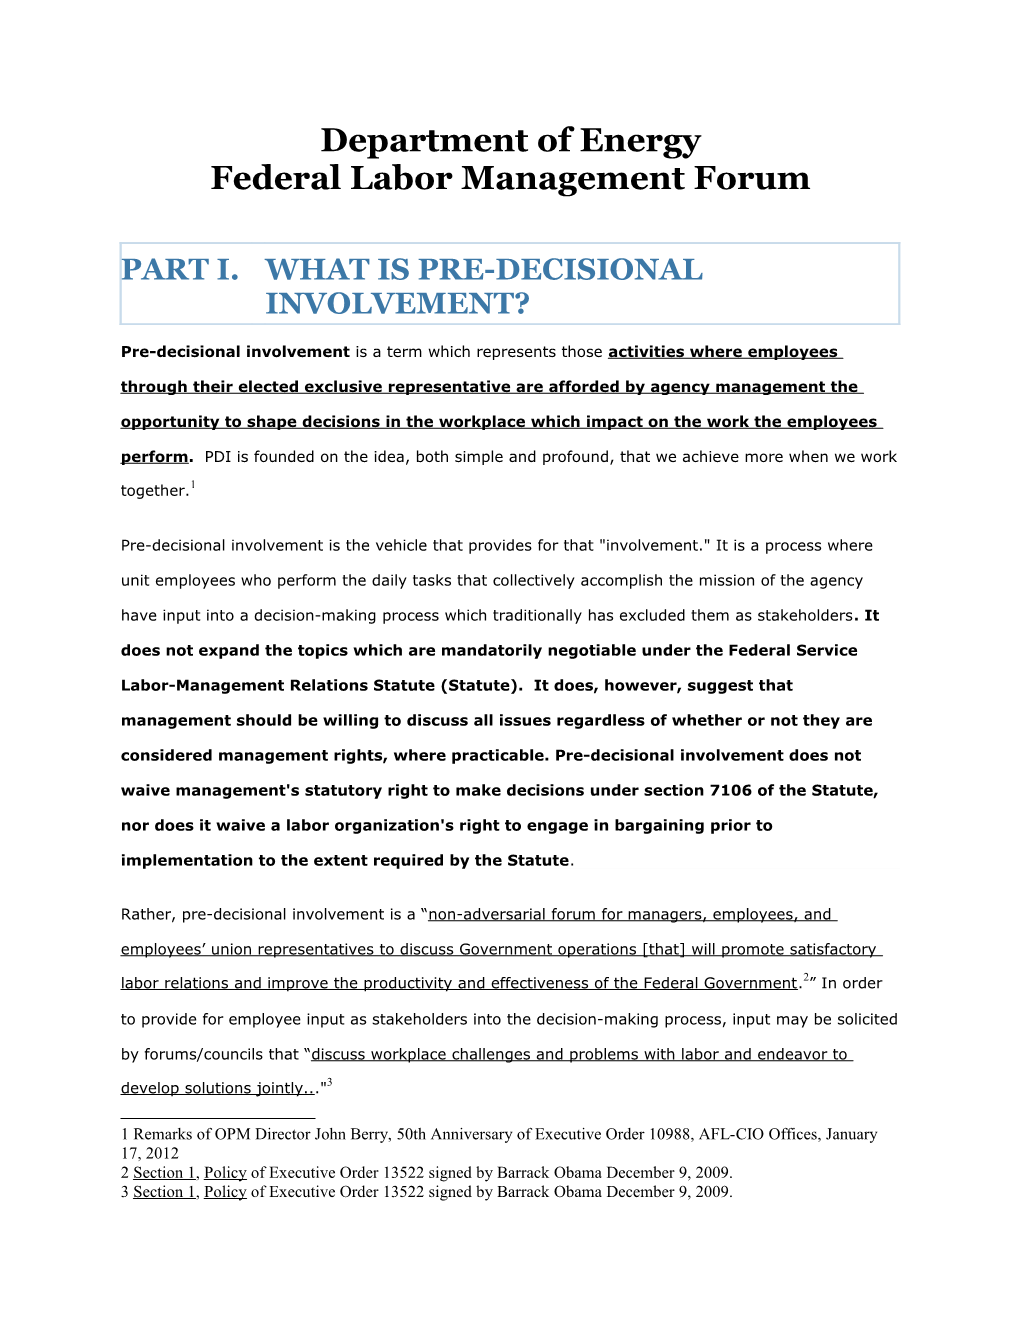 Federal Labor Management Forum